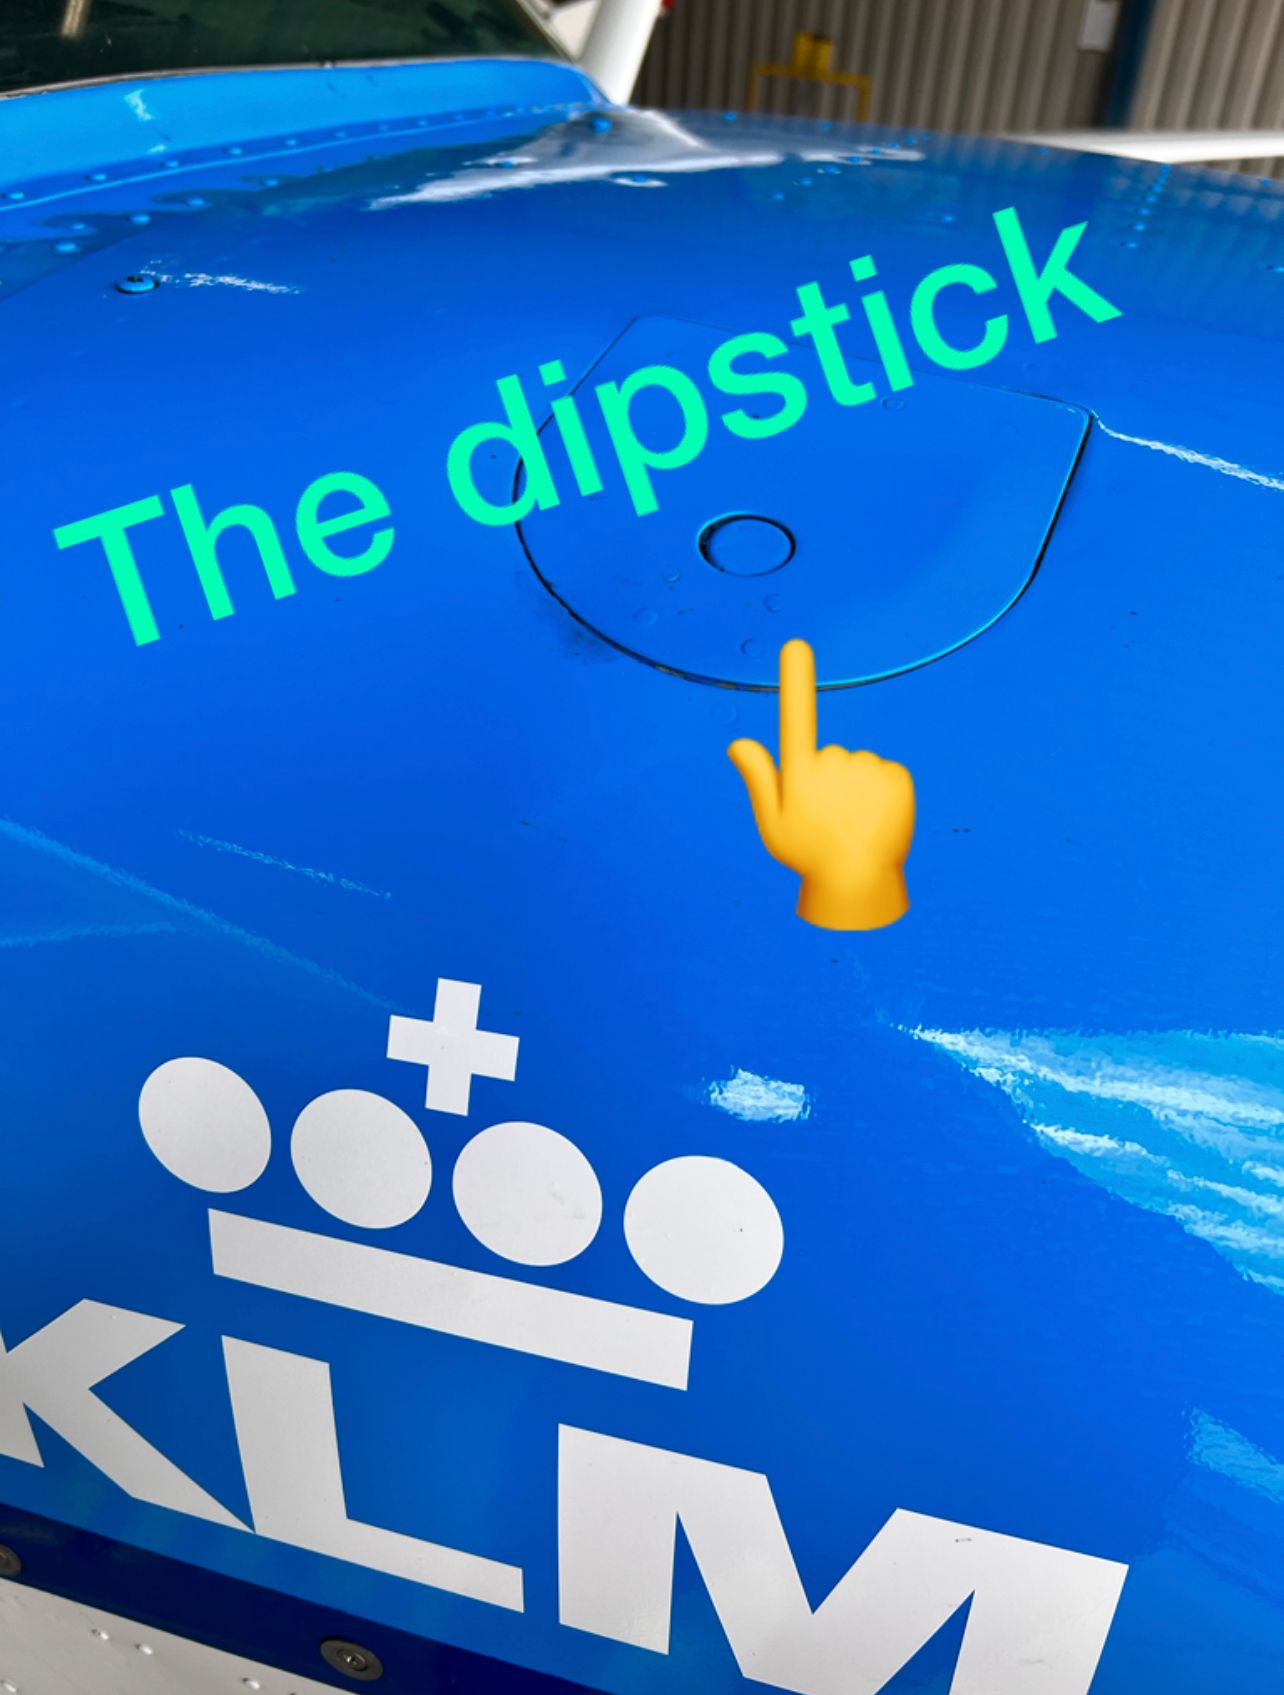 Dipstick